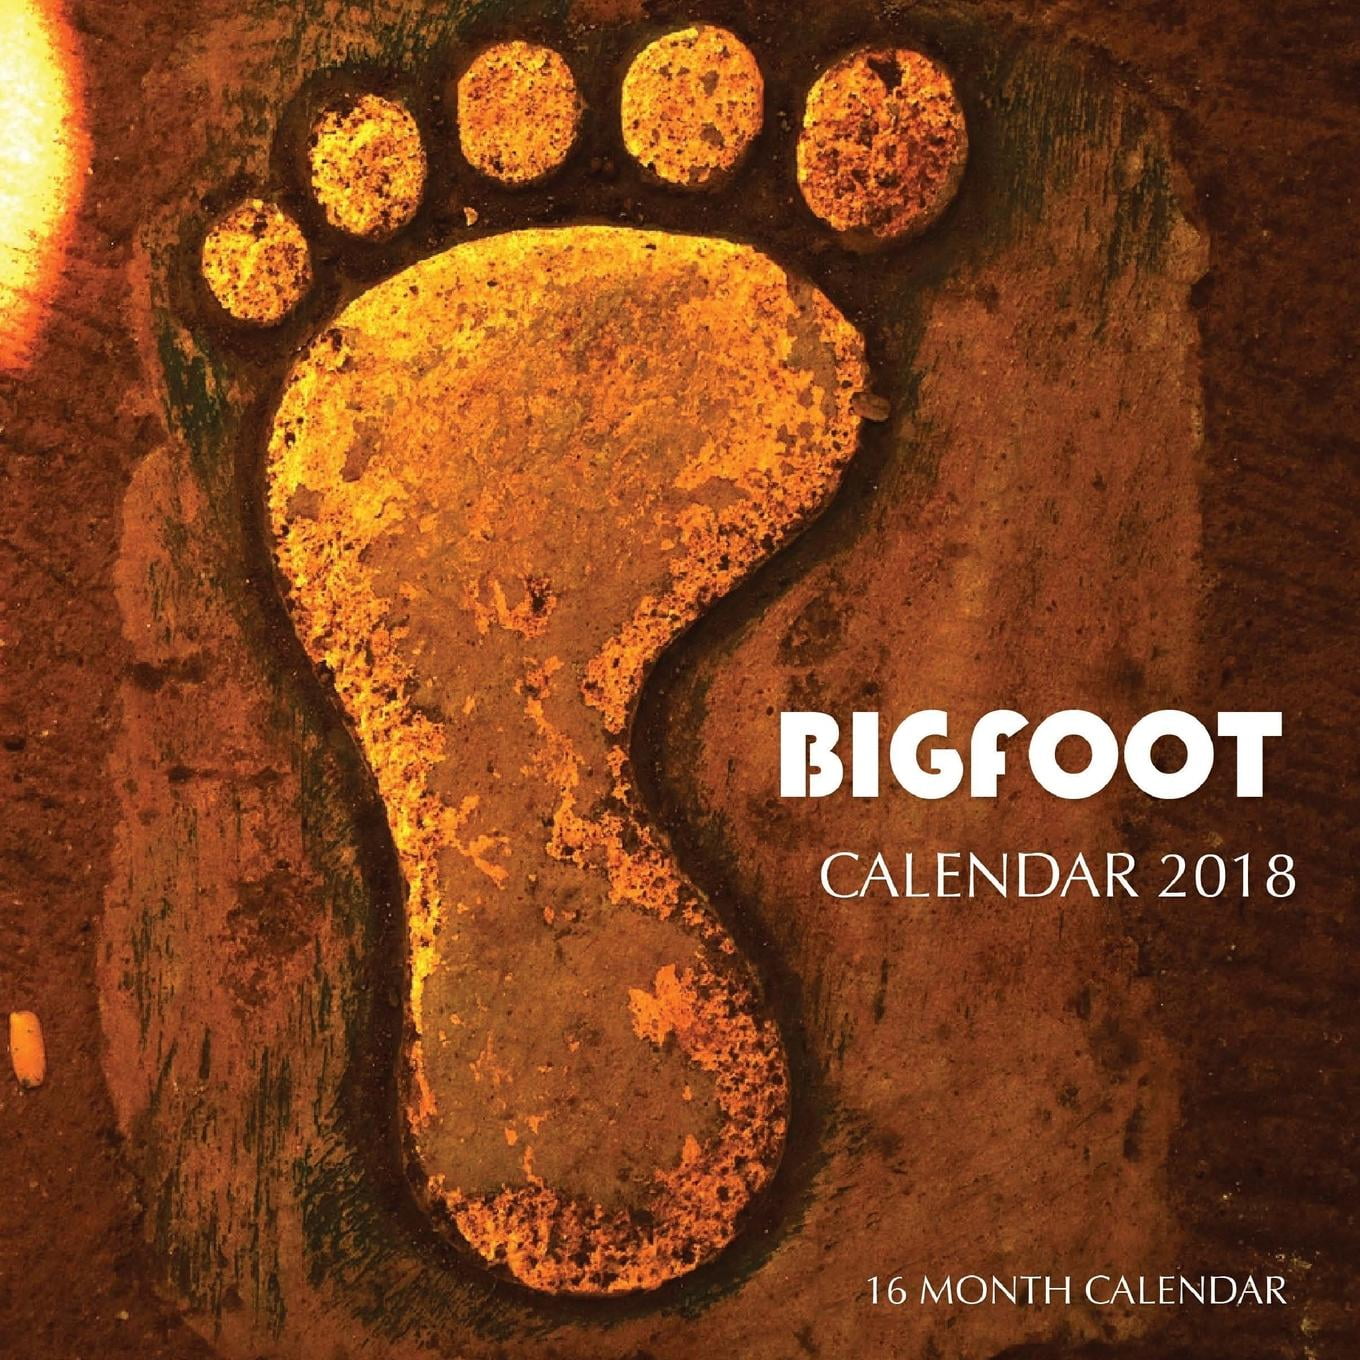 Bigfoot Calendar 2018 16 Month Calendar (Paperback)